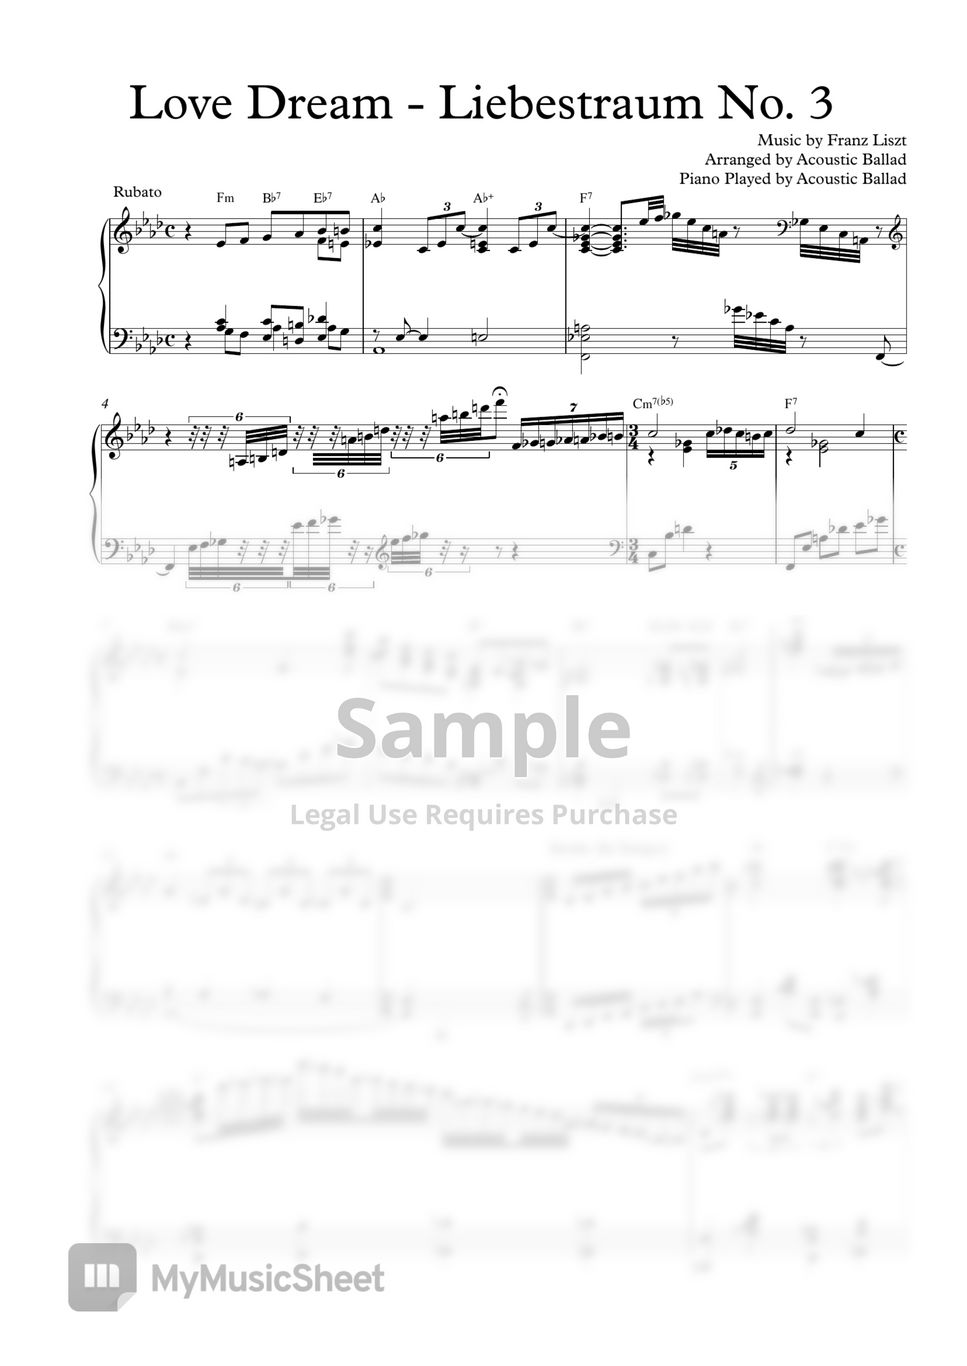 Liszt - Love Dream(Liebestraum No.3) (Jazz Piano Ver.) by Acoustic Ballad